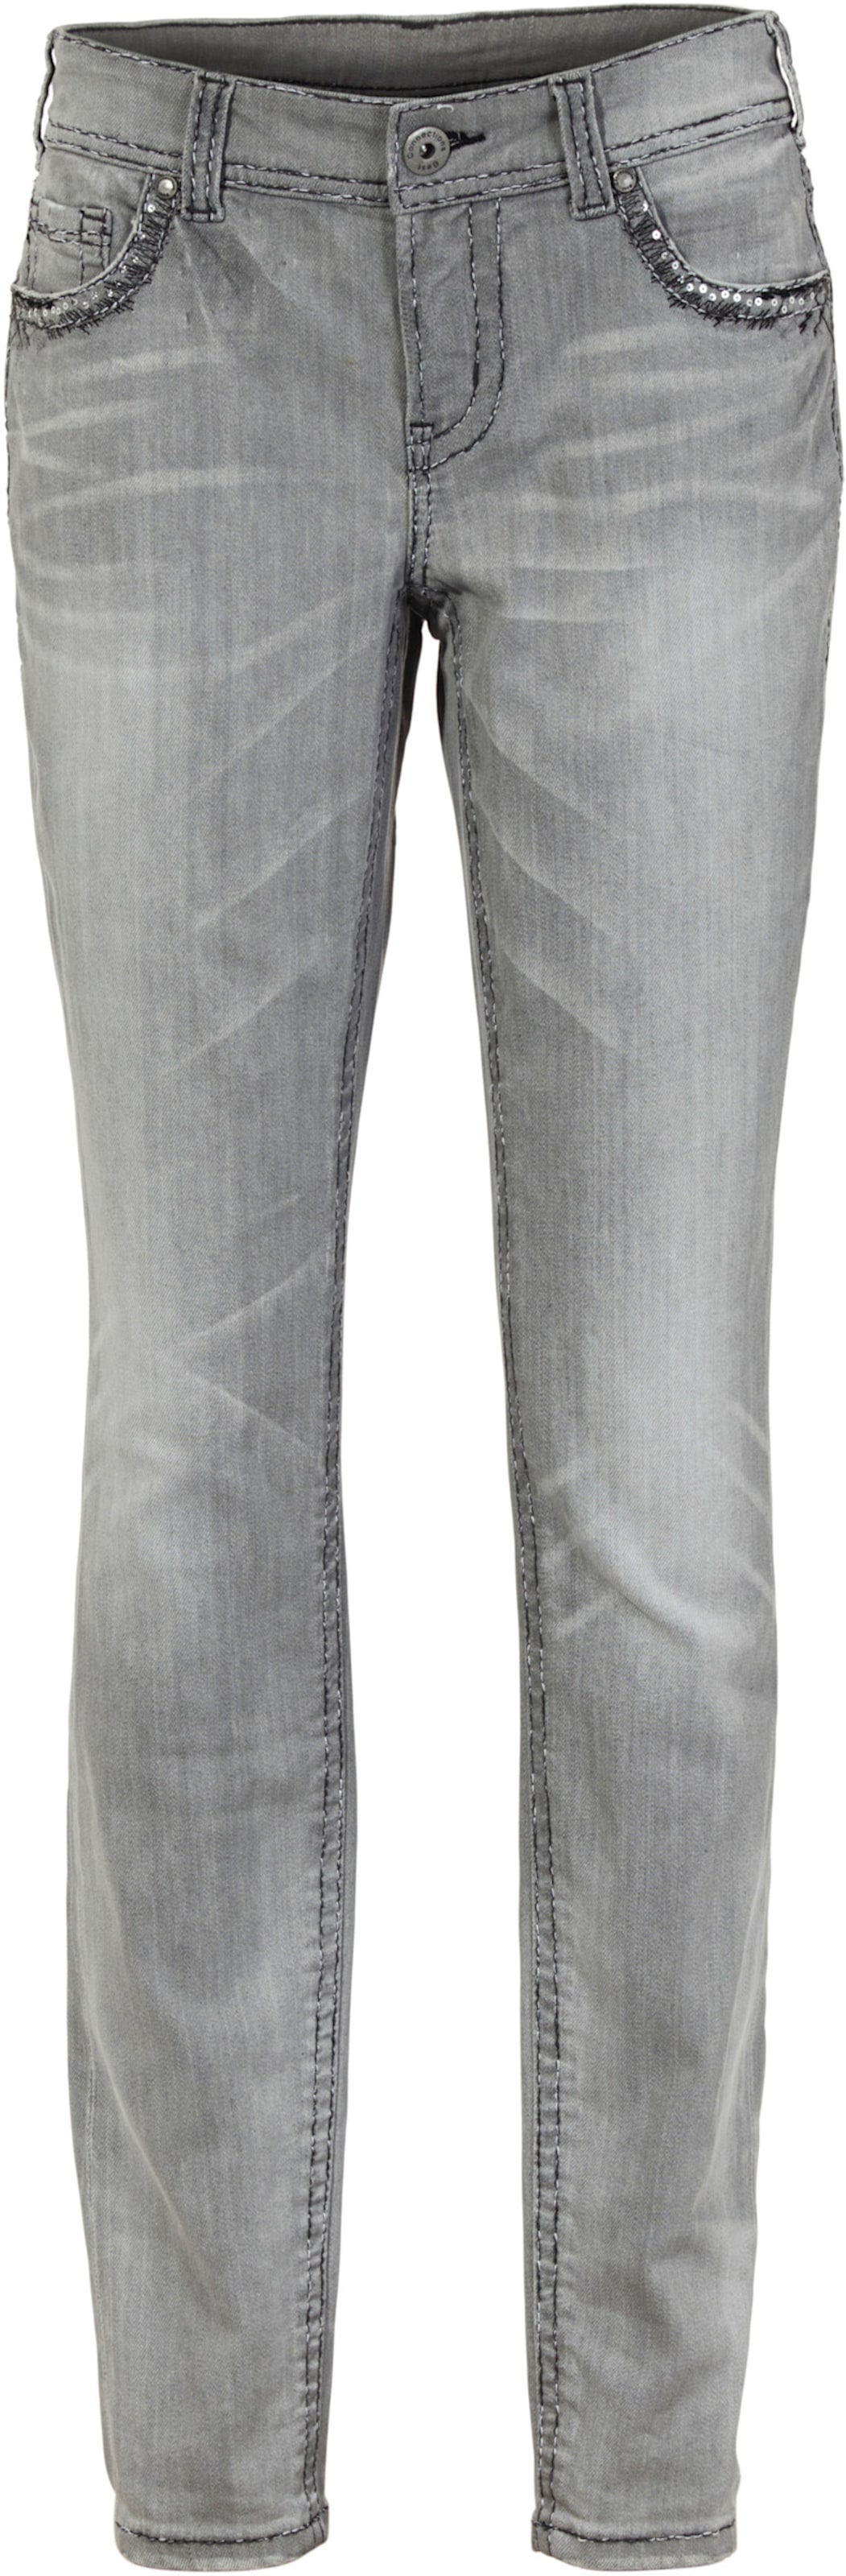 Witt Damen Bauchweg-Jeans, grey denim